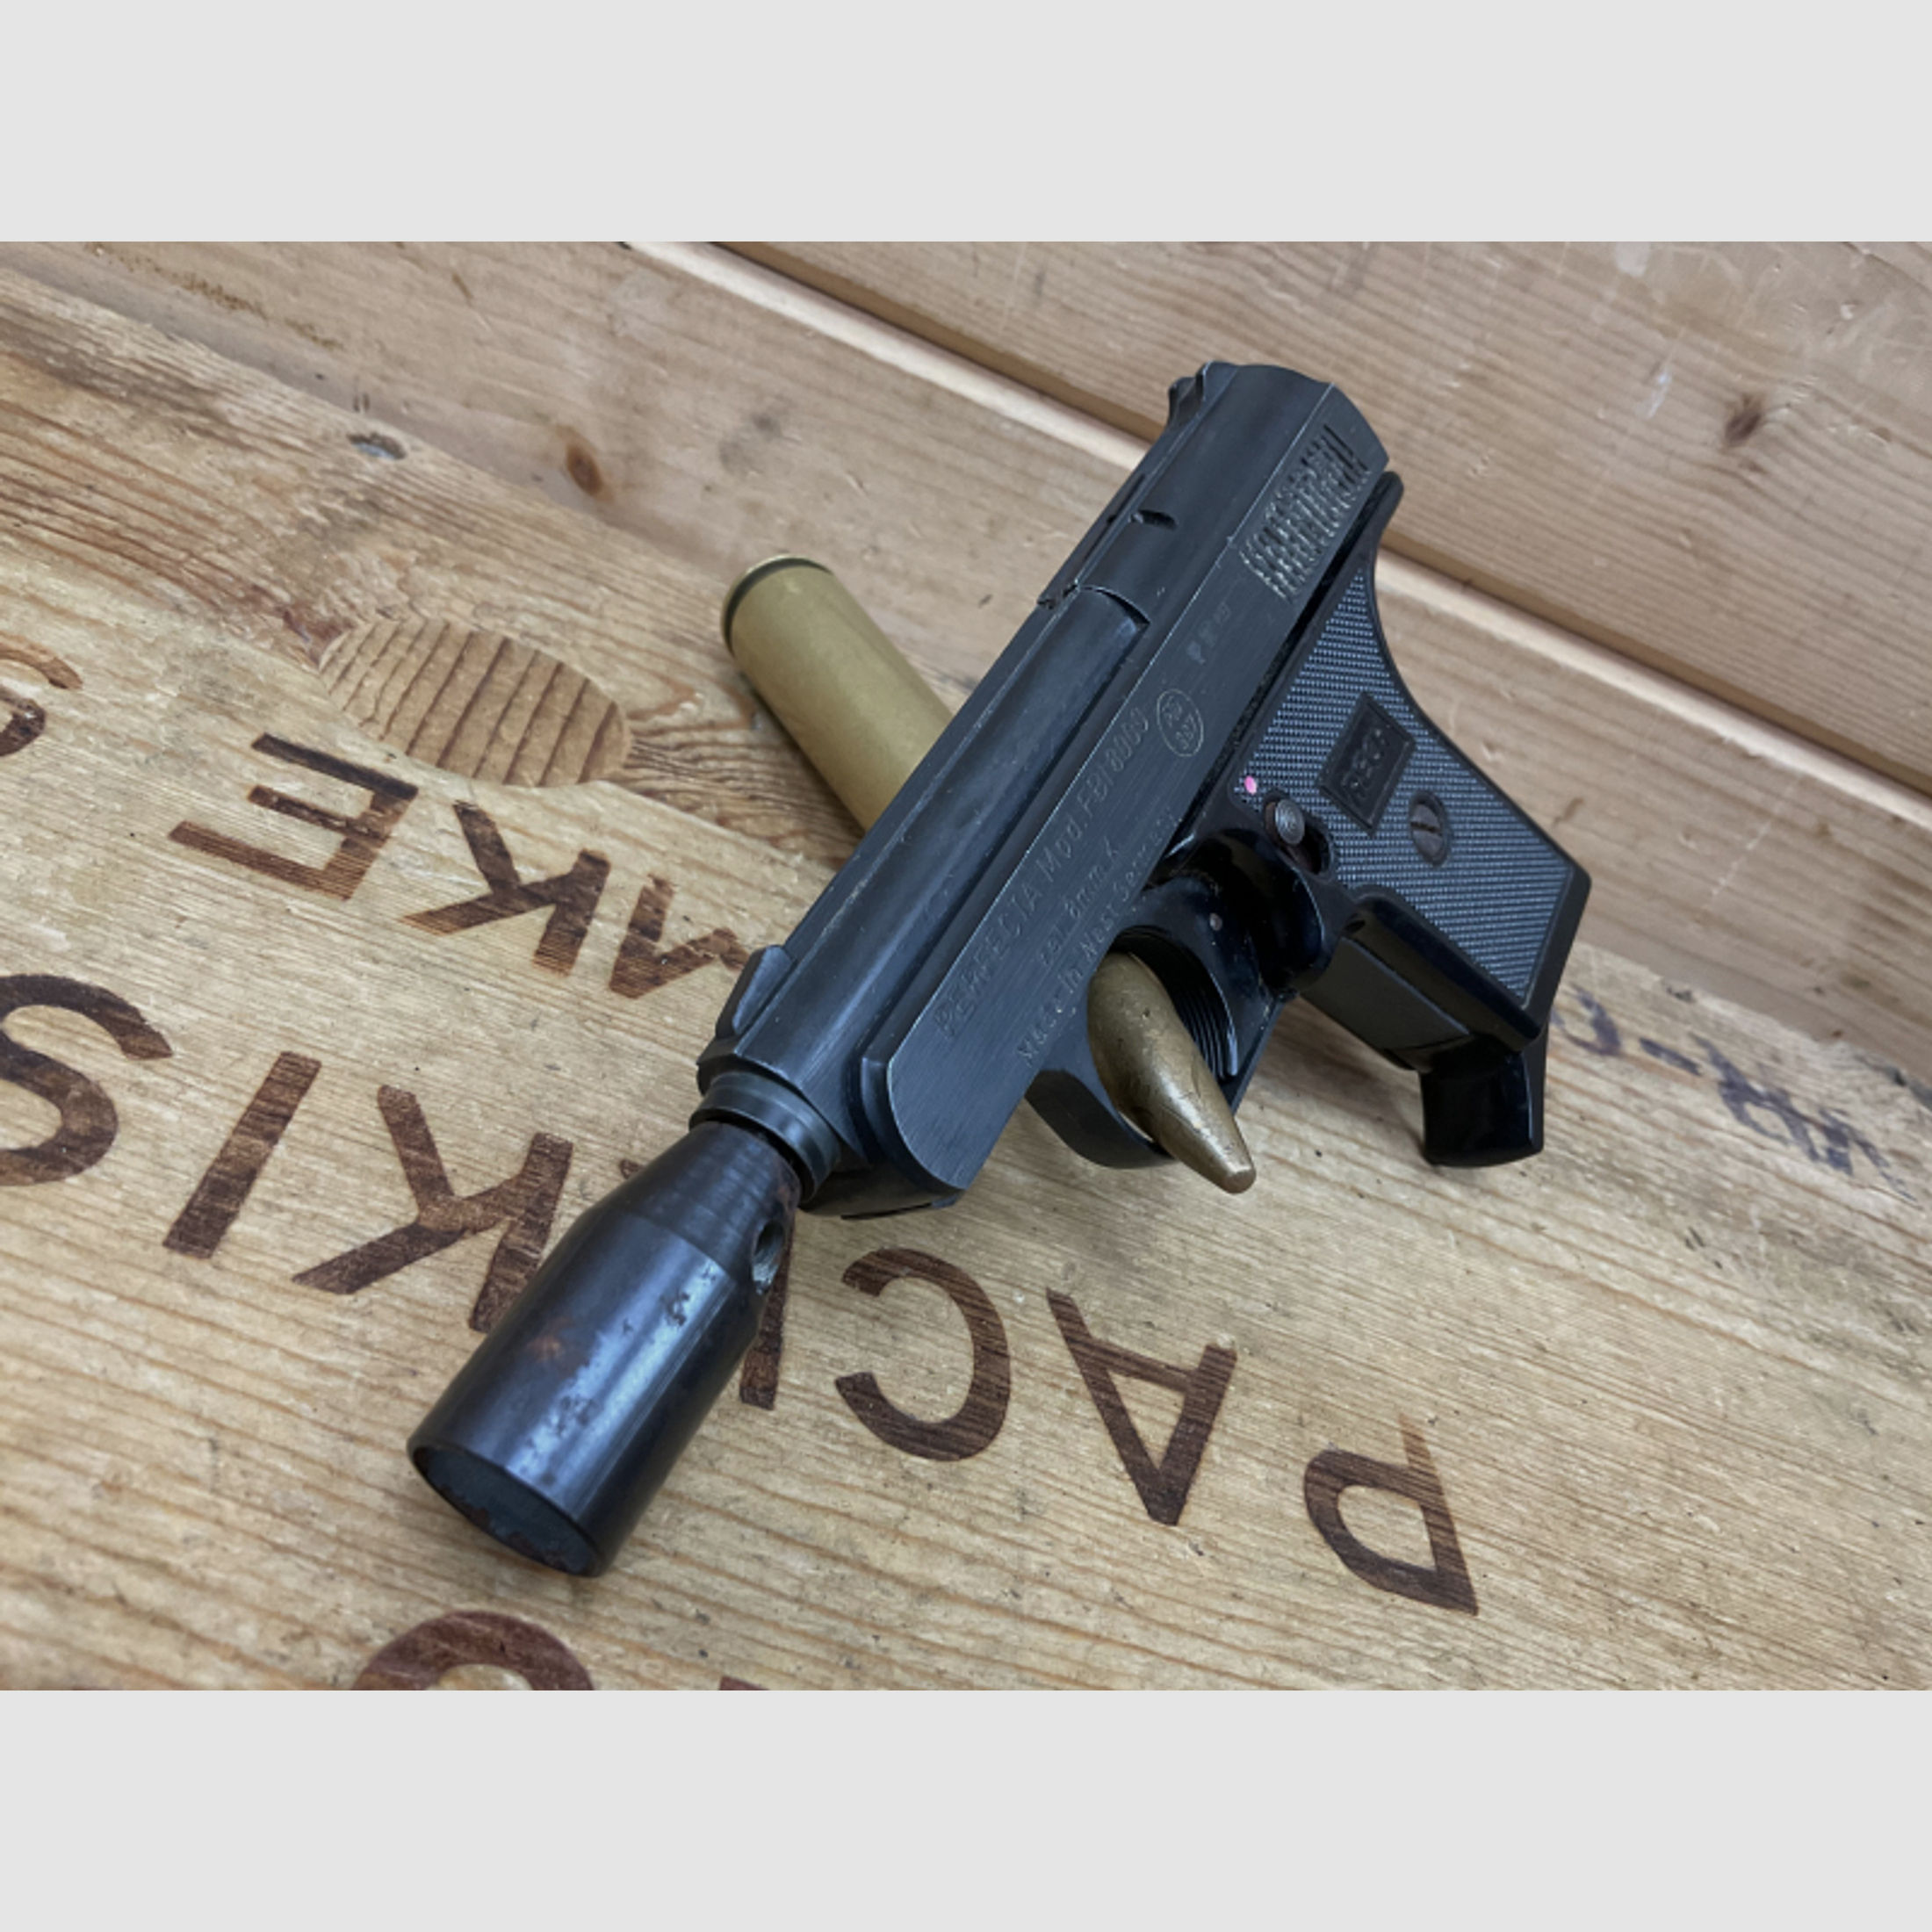 SRS Pistole Reck Perfecta Mod. FBI 8000, PTB 387 Kal.8mm Knall